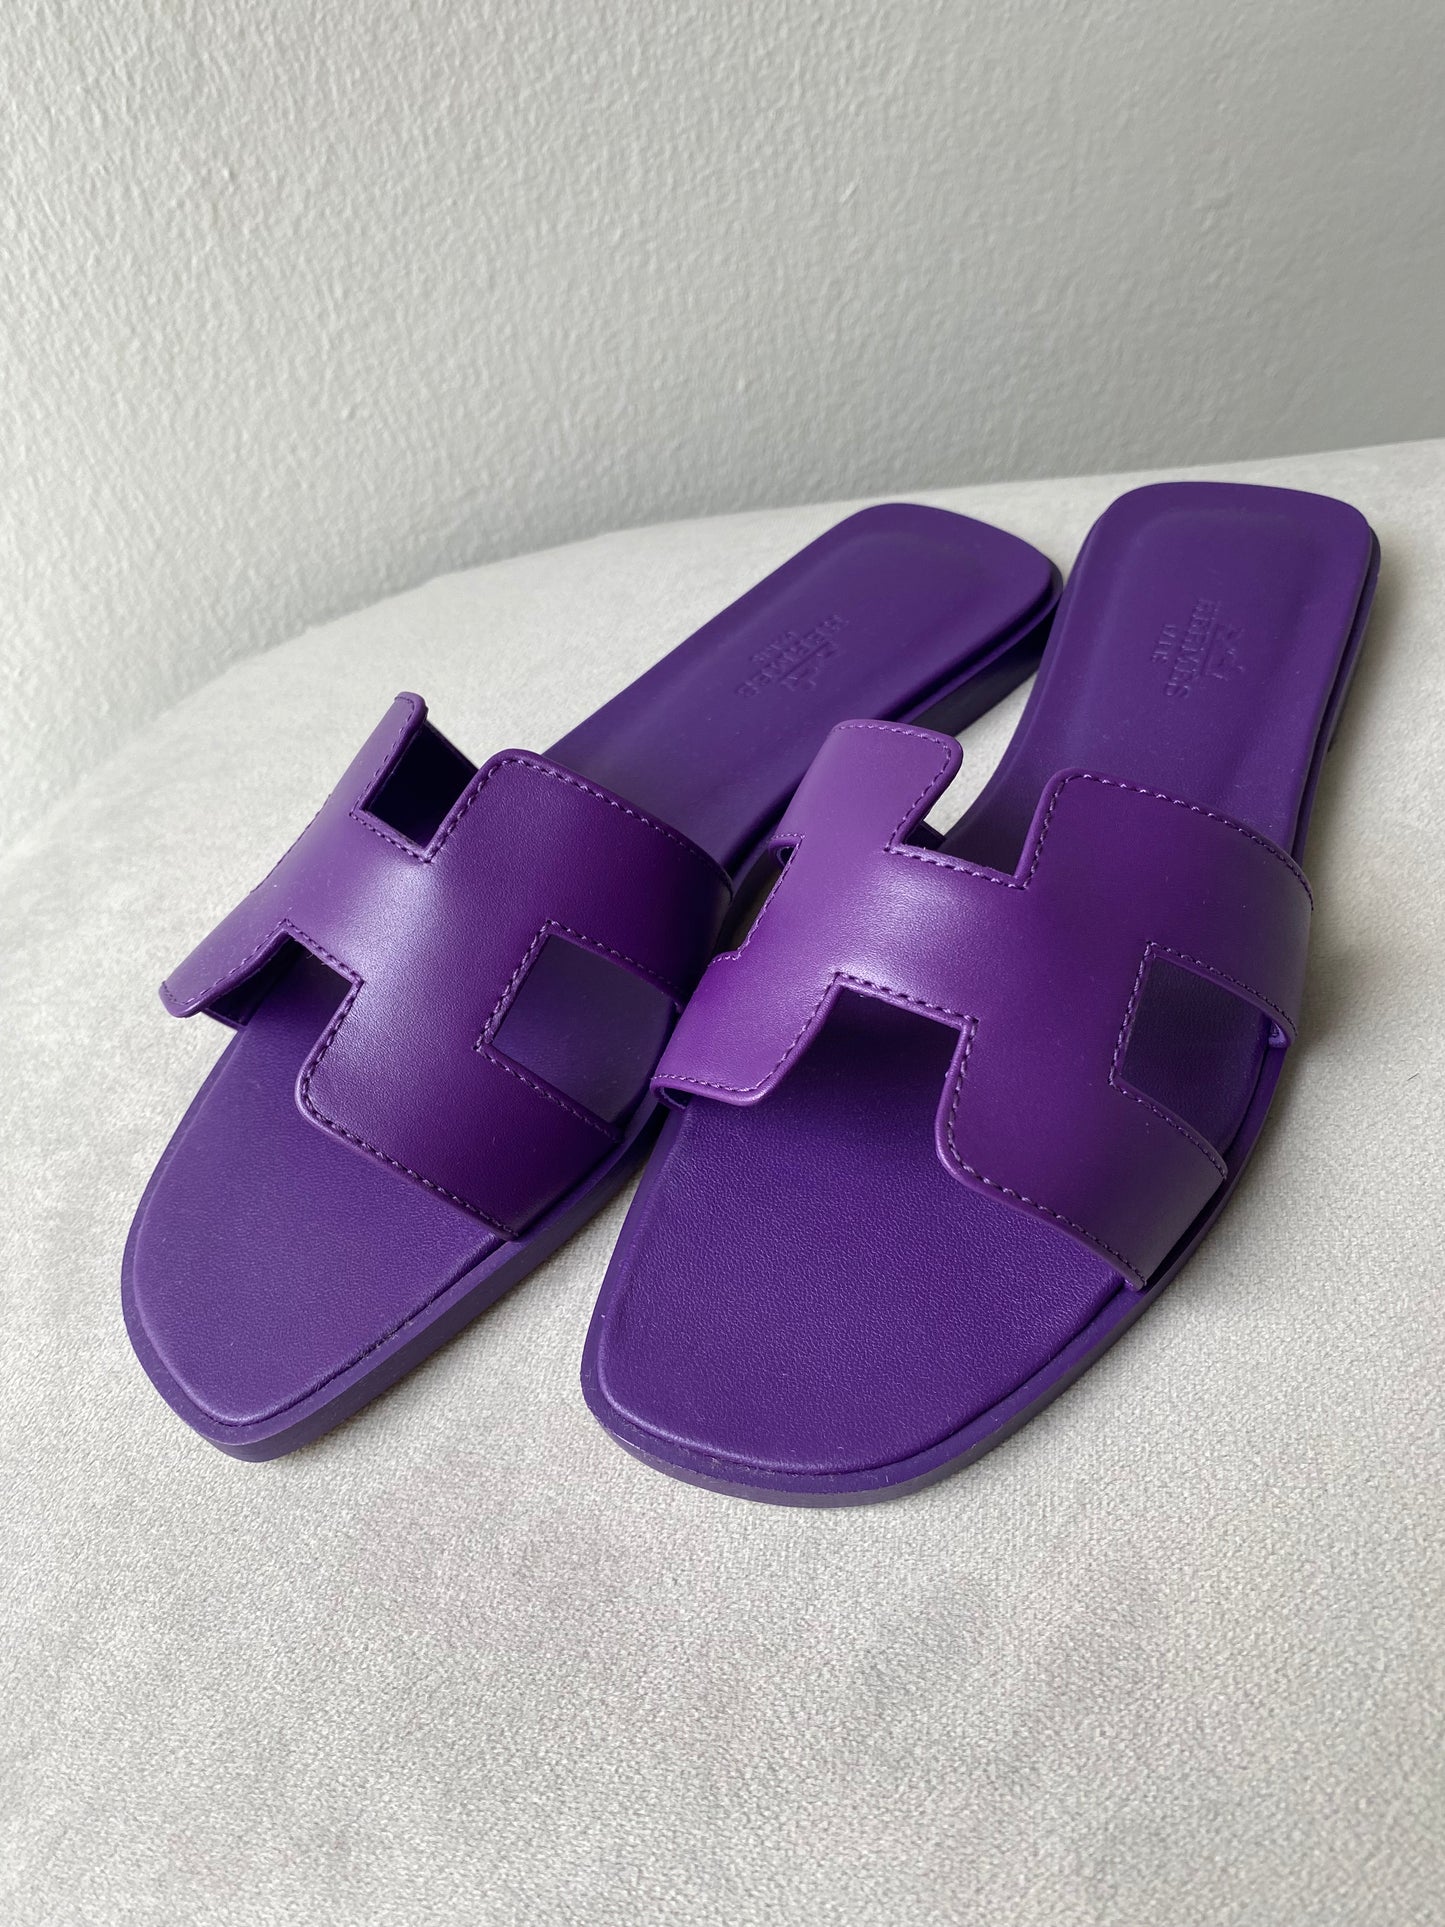 HERMÈS Oran Sandals in Violet Majorette